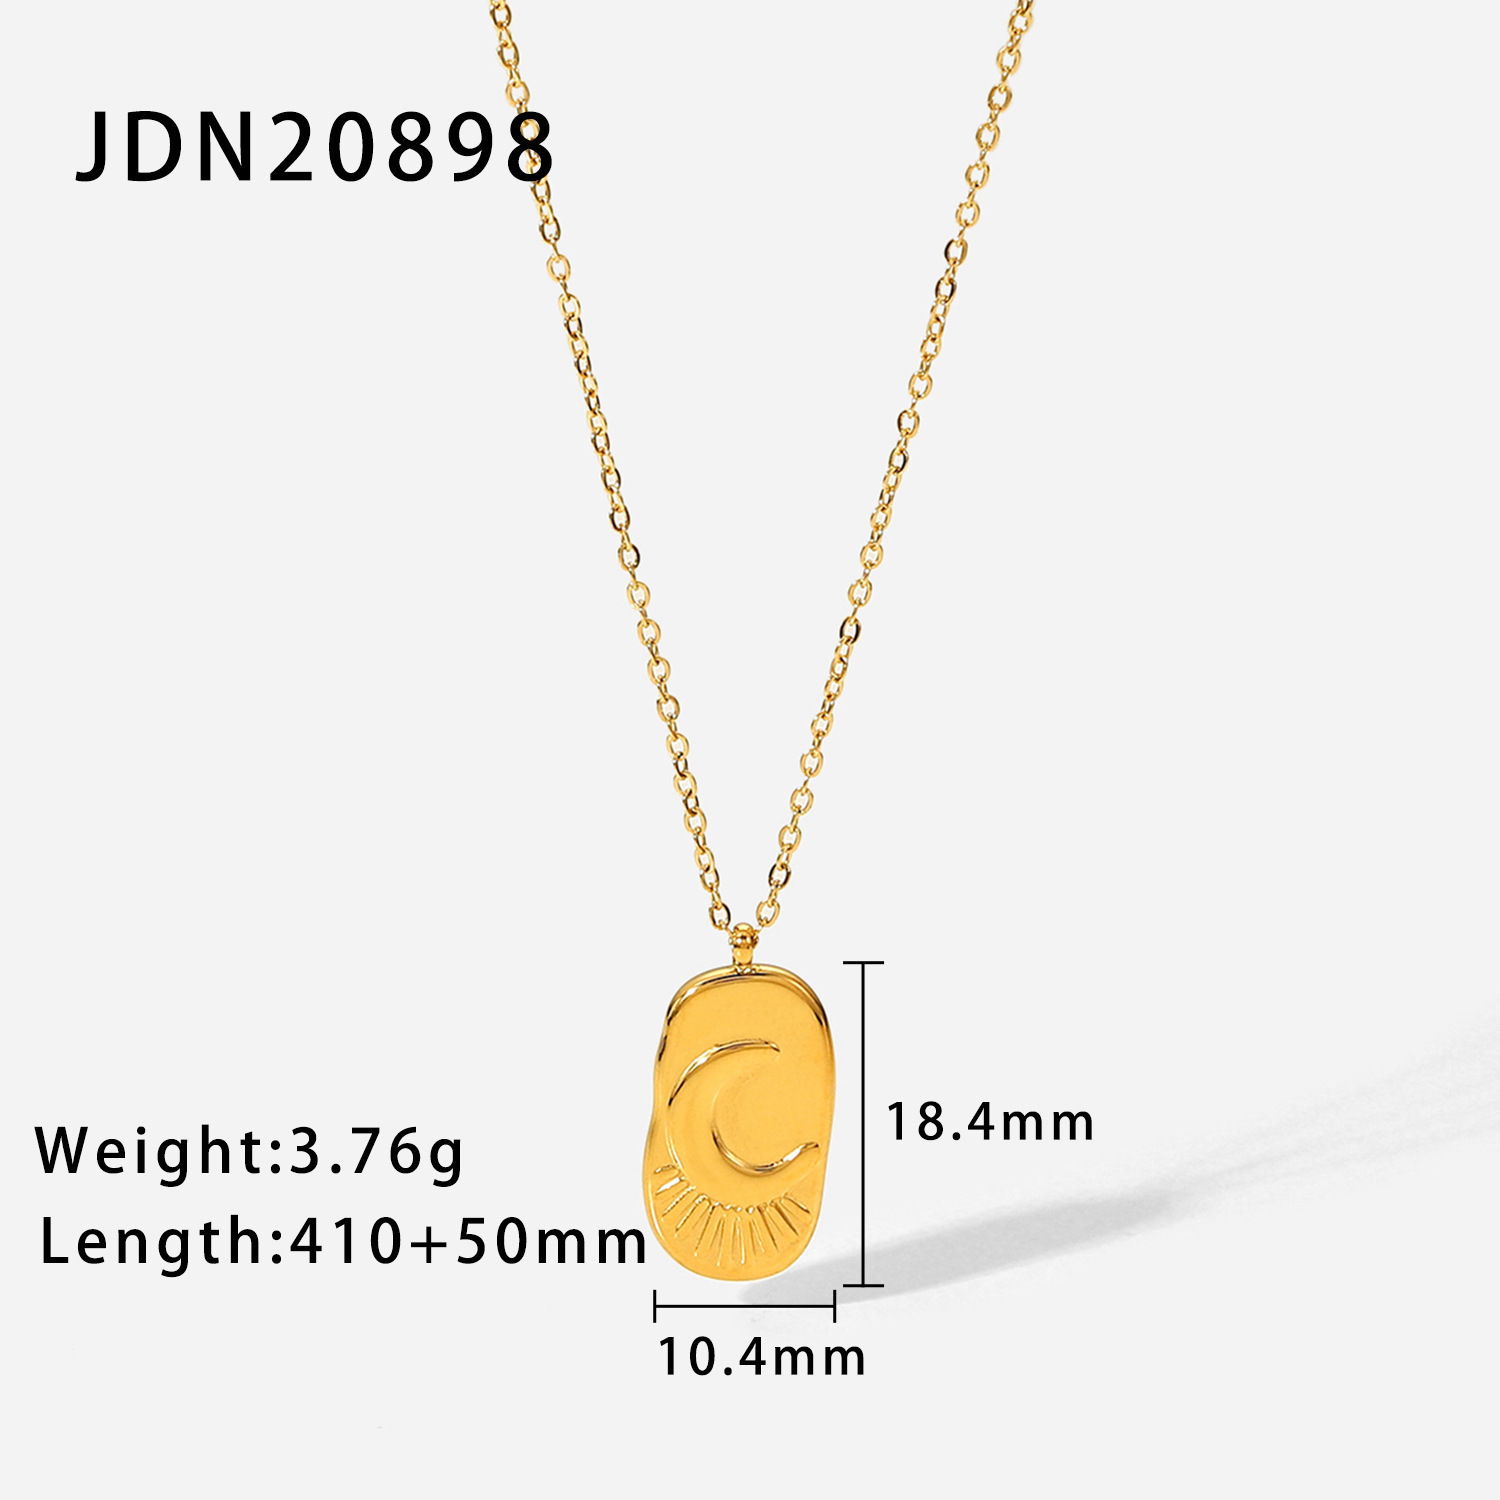 2:JDN20898 10.4x18.4mm